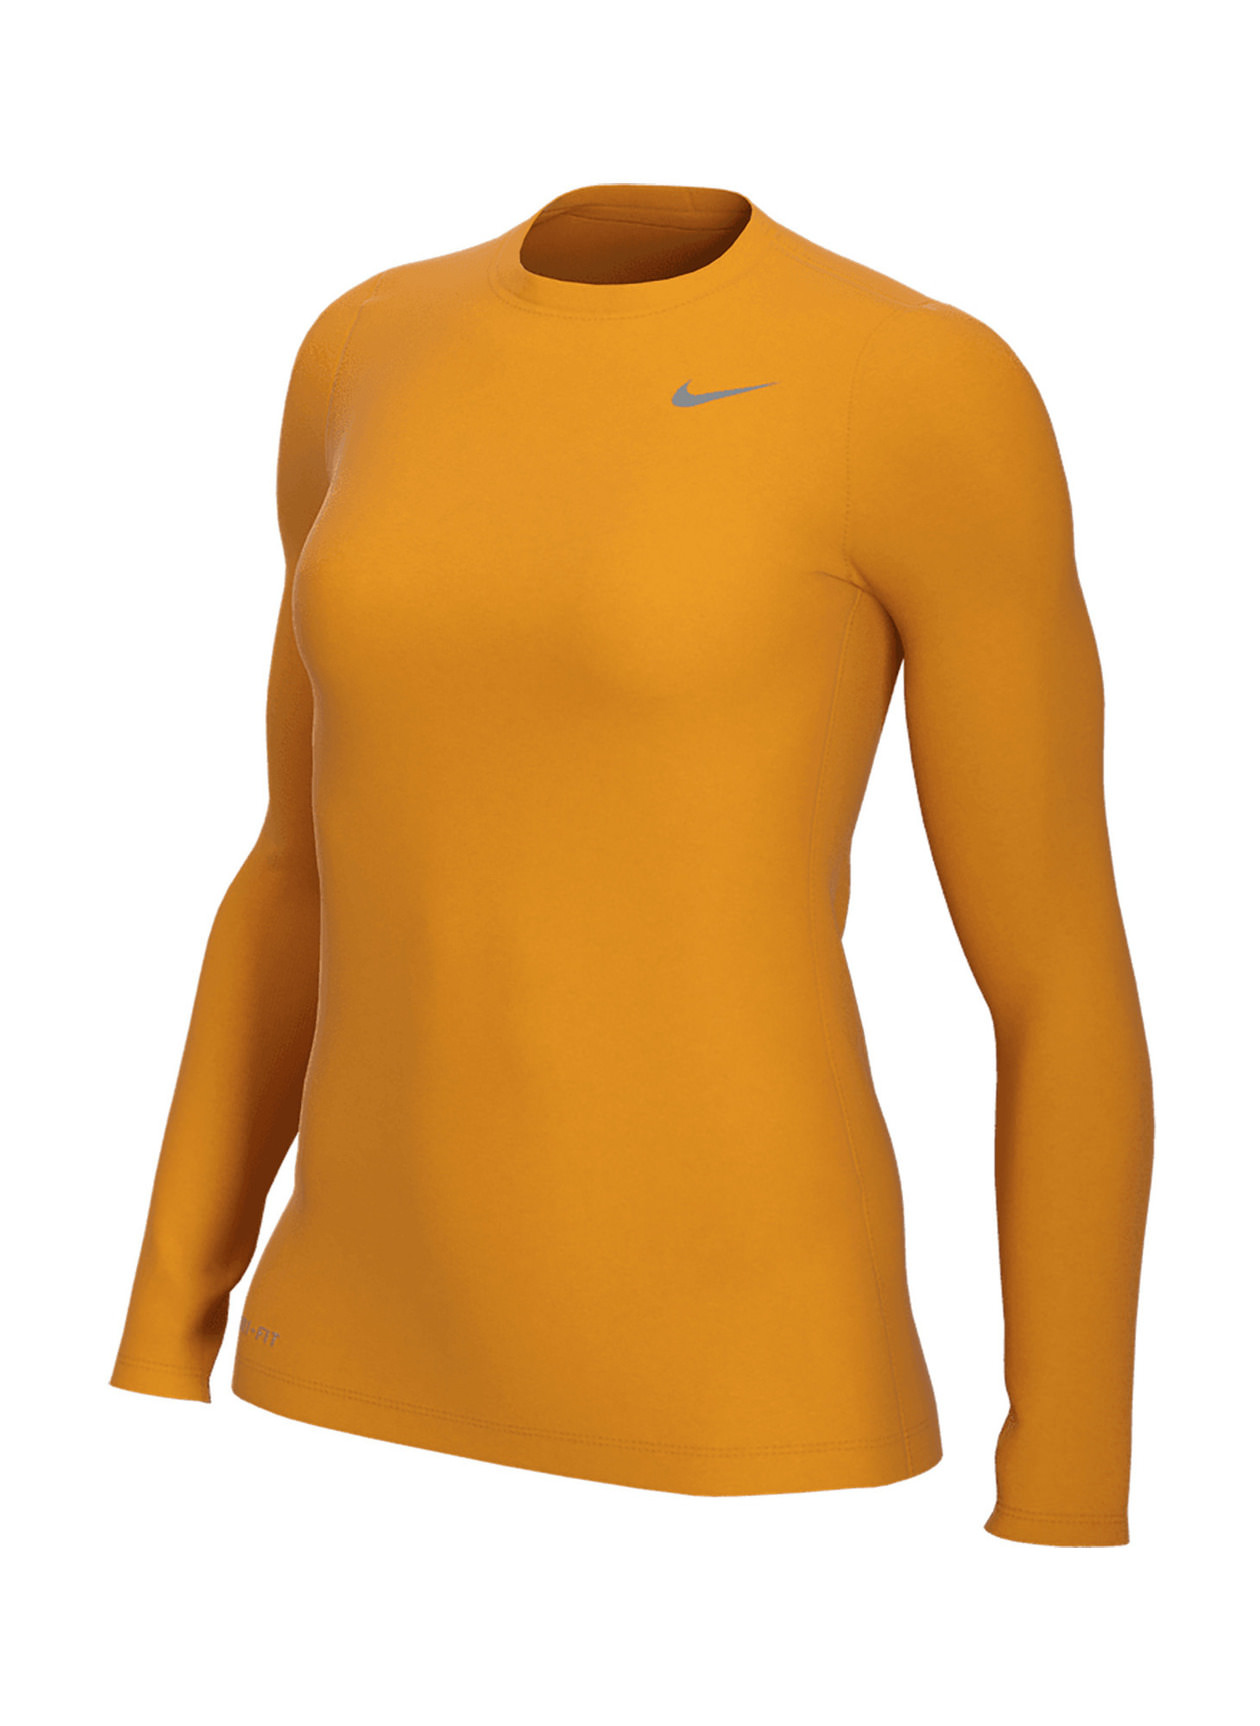 Nike Women's Bright Ceramic Legend Long-Sleeve Training T-Shirt